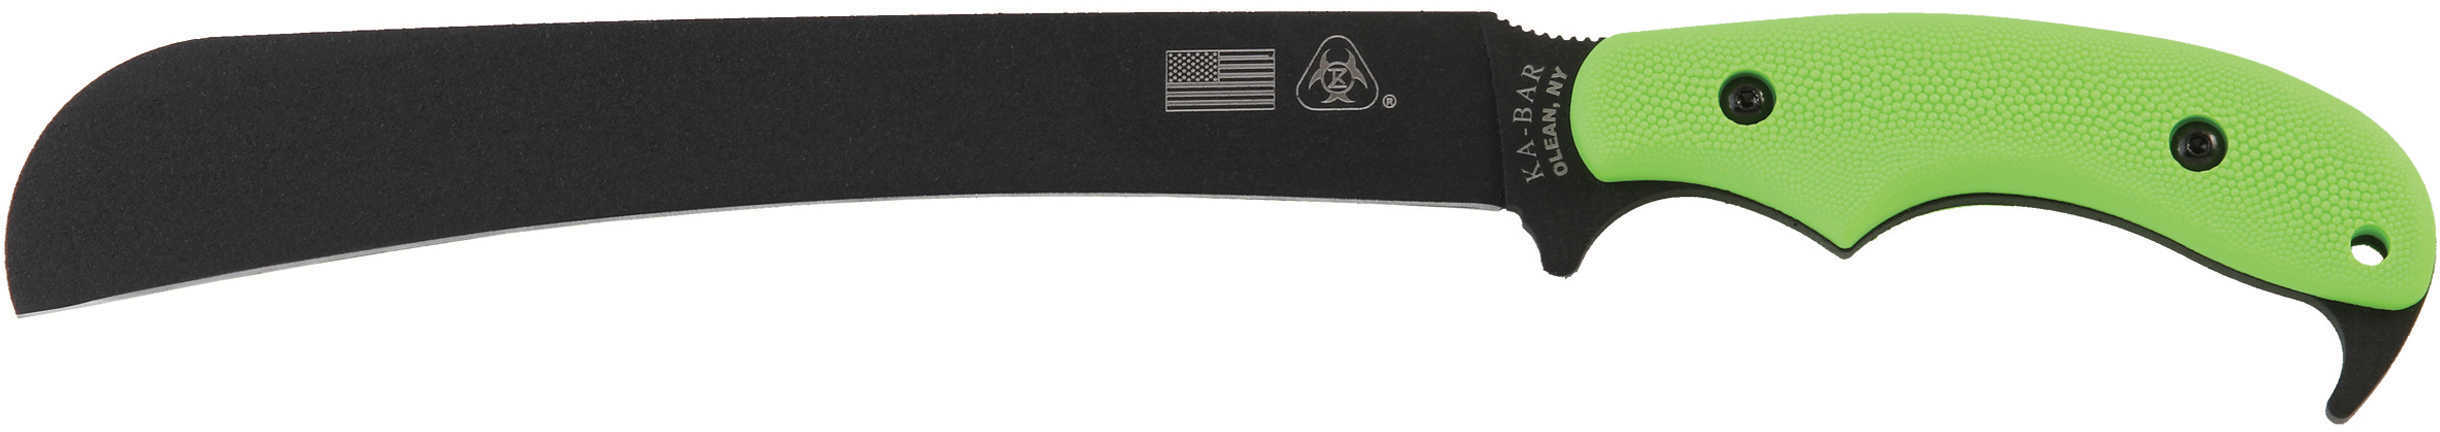 Ka-Bar ZK Knife Series "Pestilence" Chopper 2-5702-5